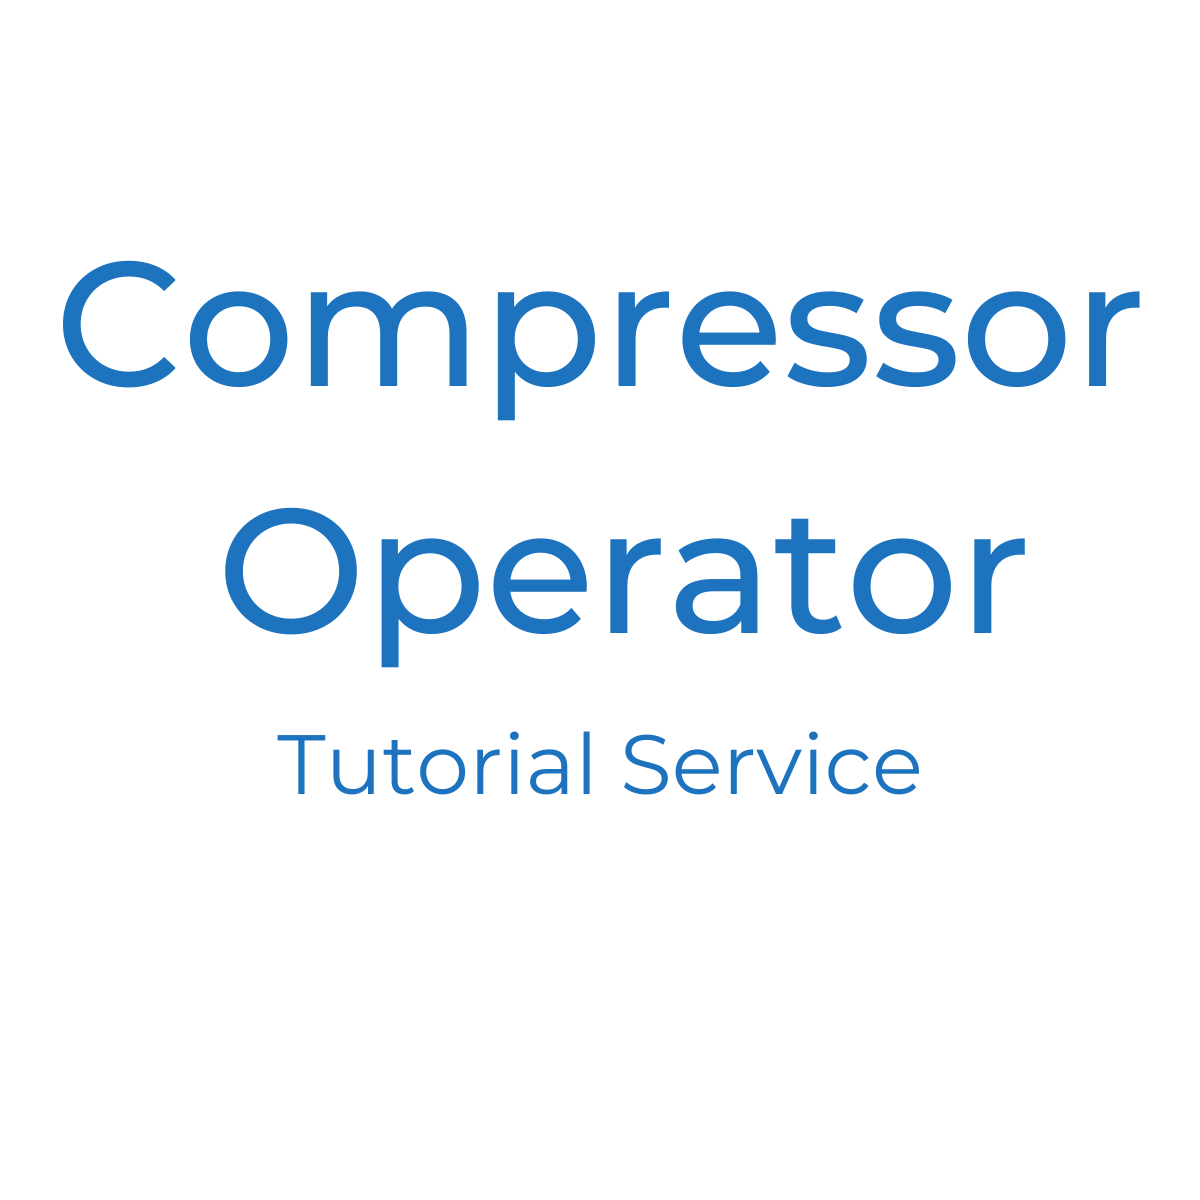 Compressor Operator Tutorial Service